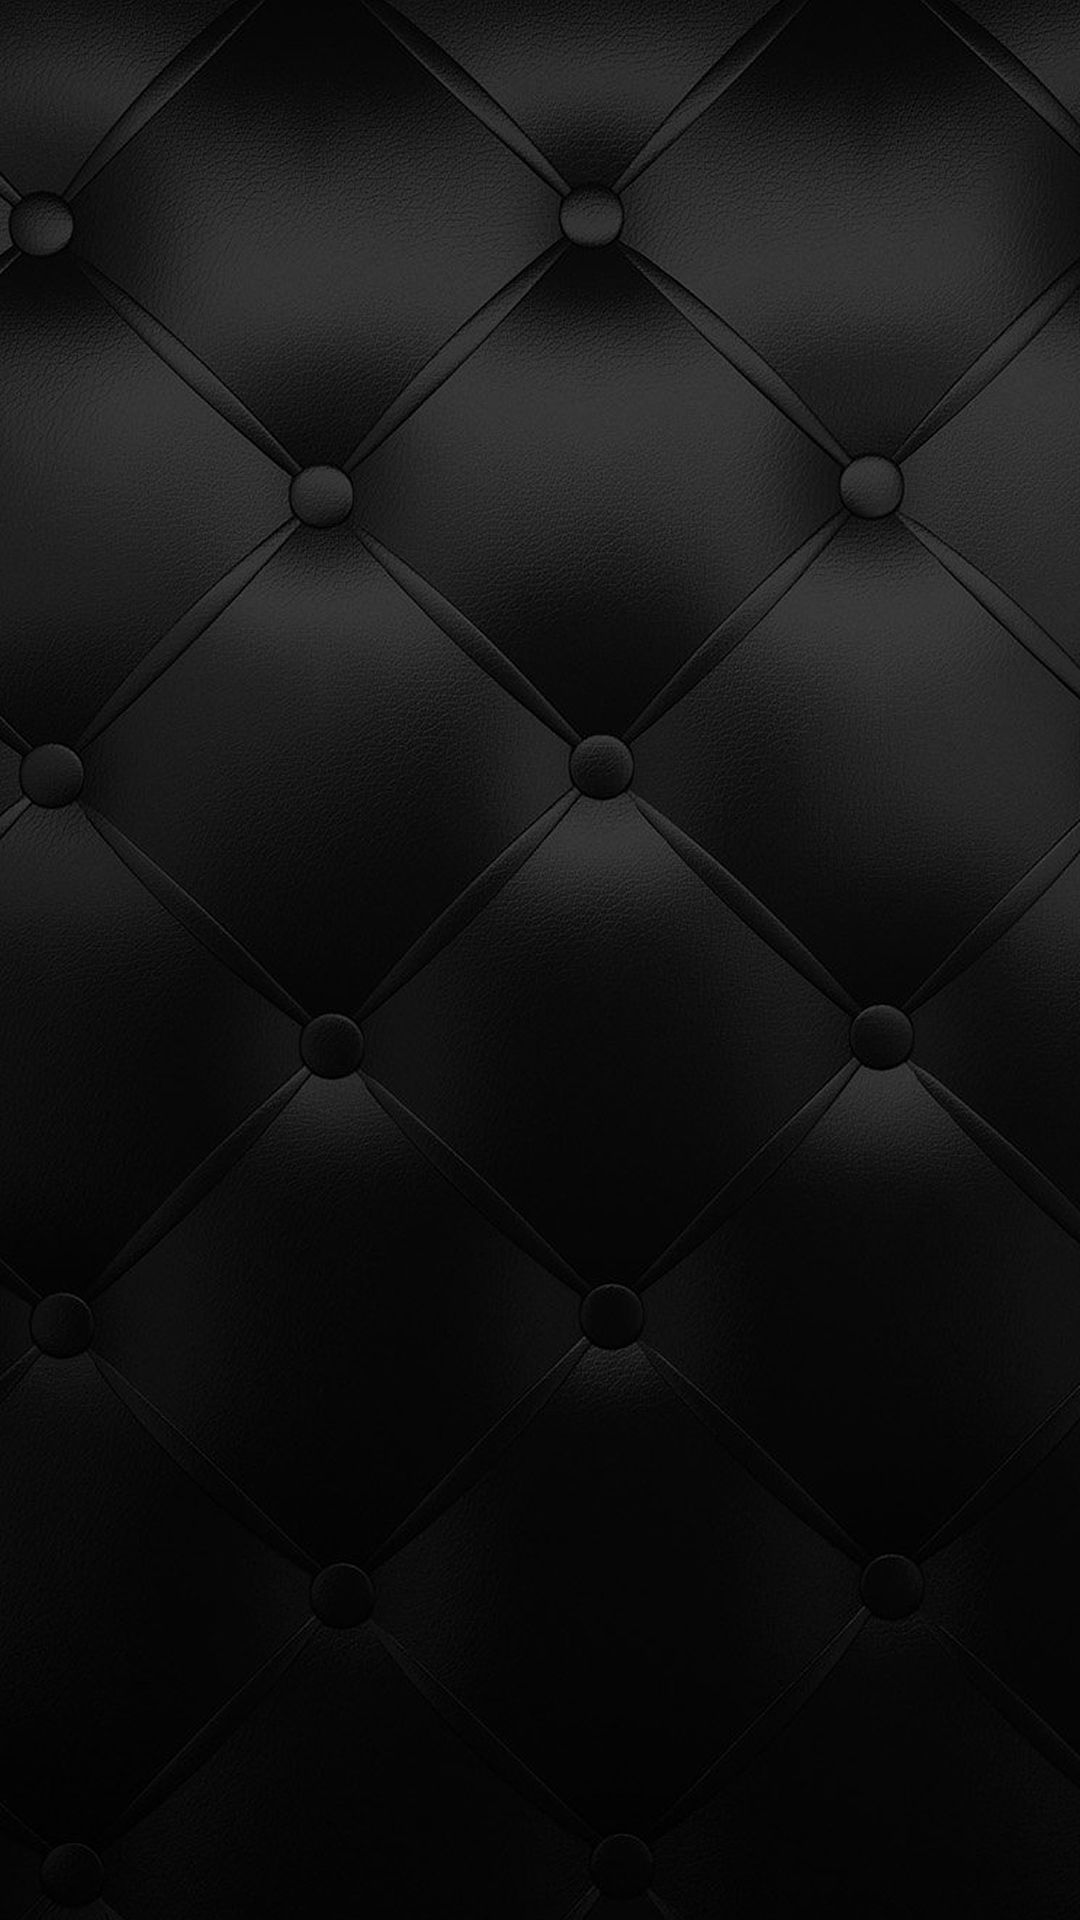 Sofa Black Texture Pattern iPhone 6 Wallpaper Download | iPhone ...